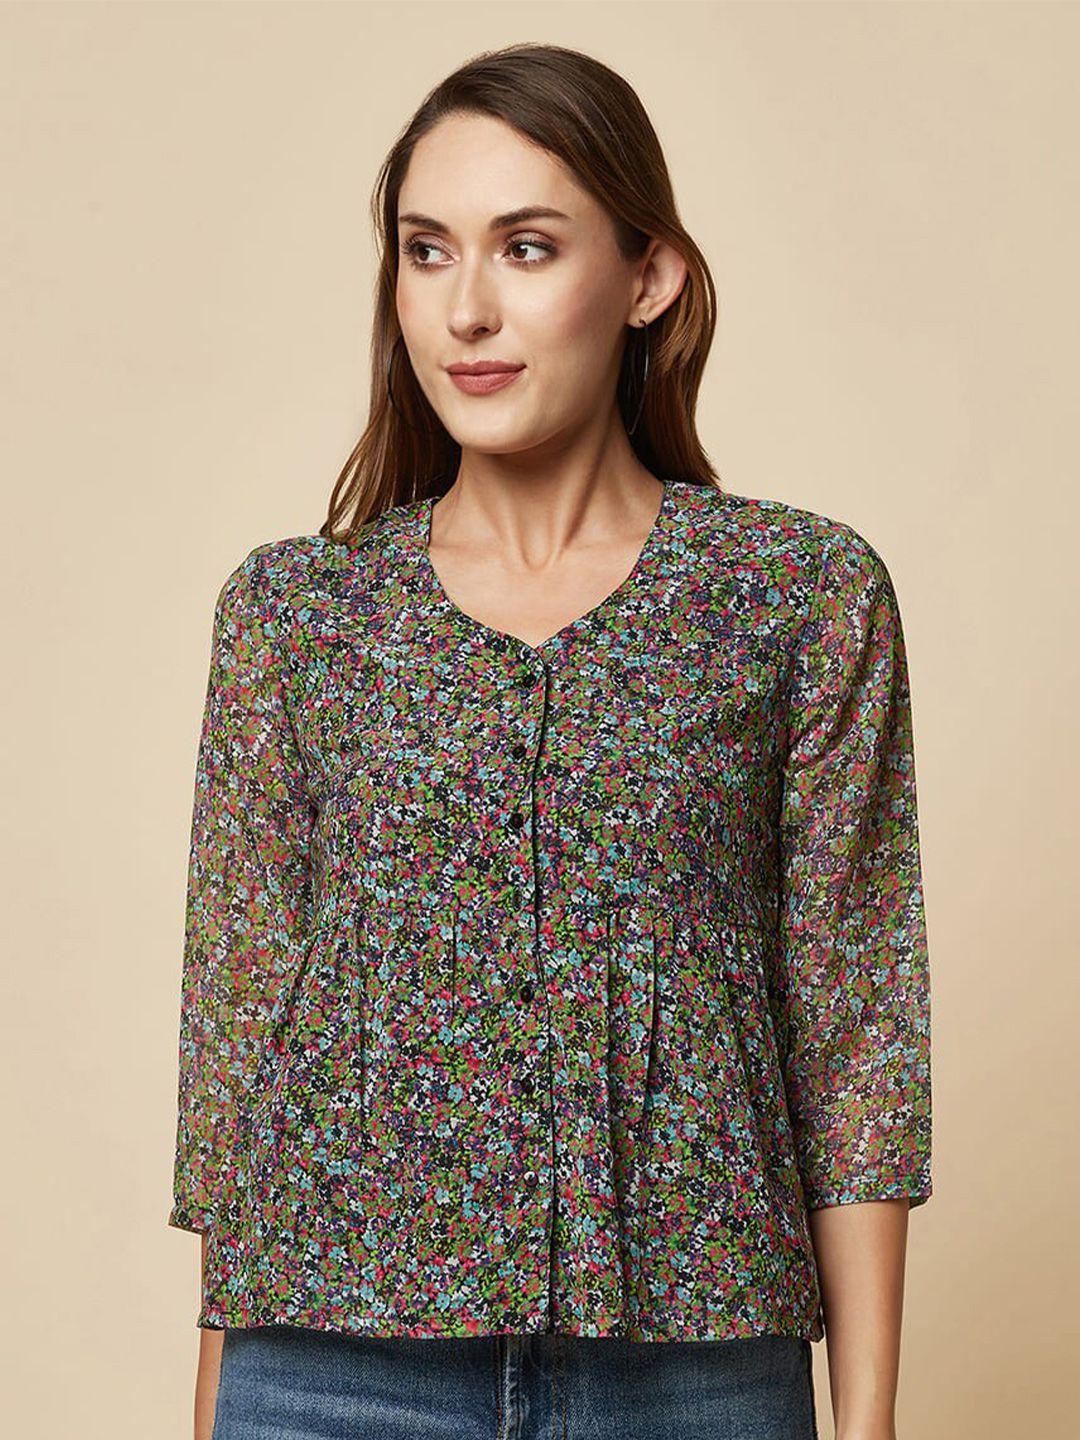 raassio floral printed georgette shirt style top